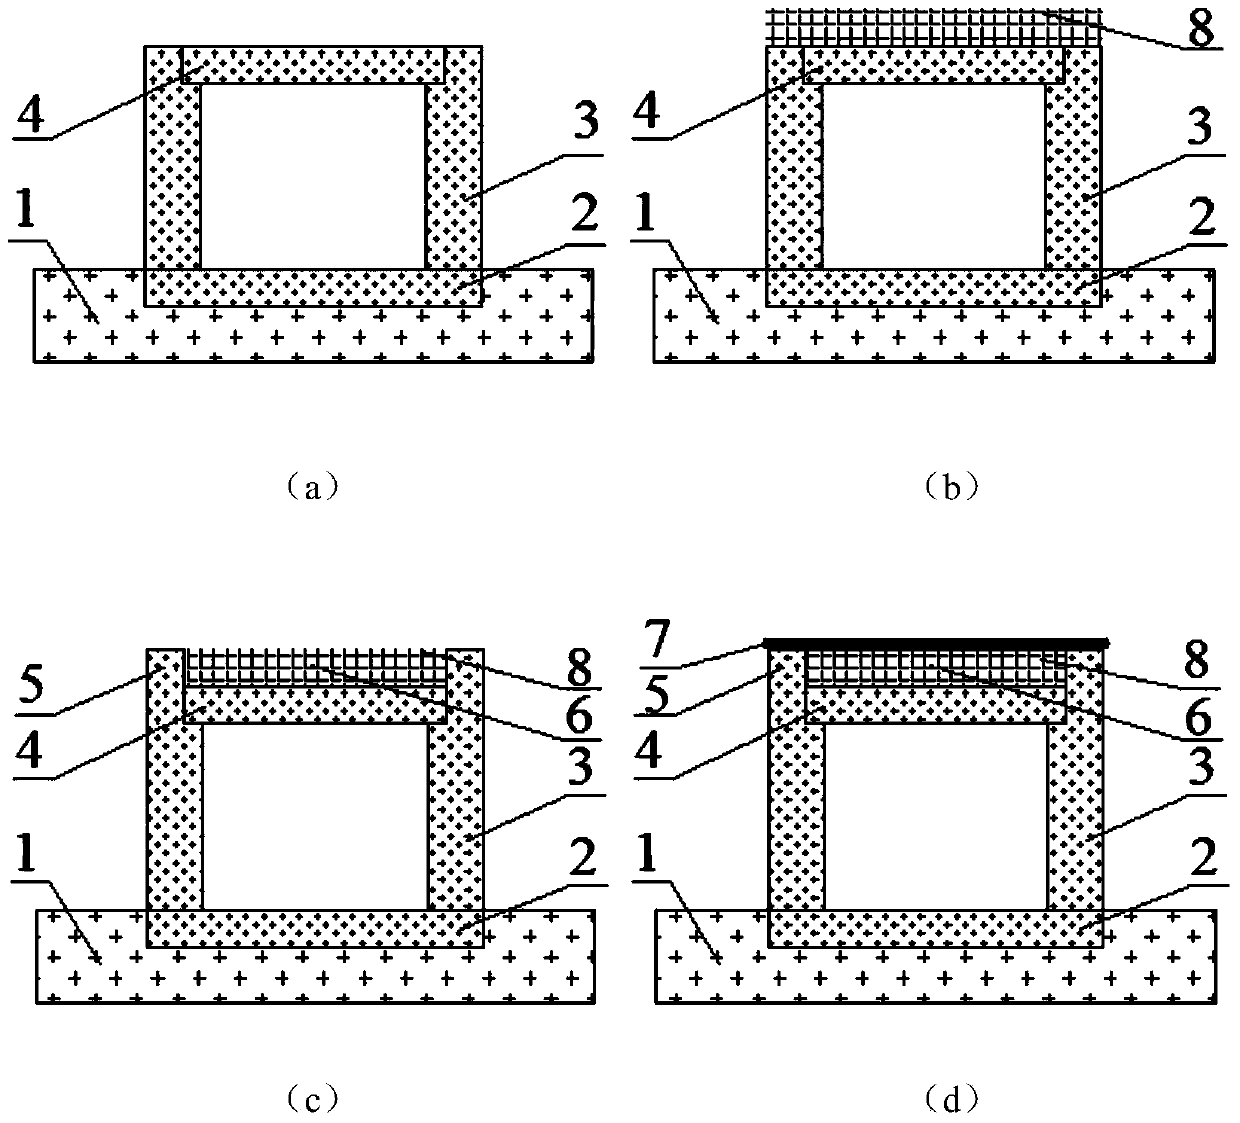 Load-shedding type rigid culvert structure